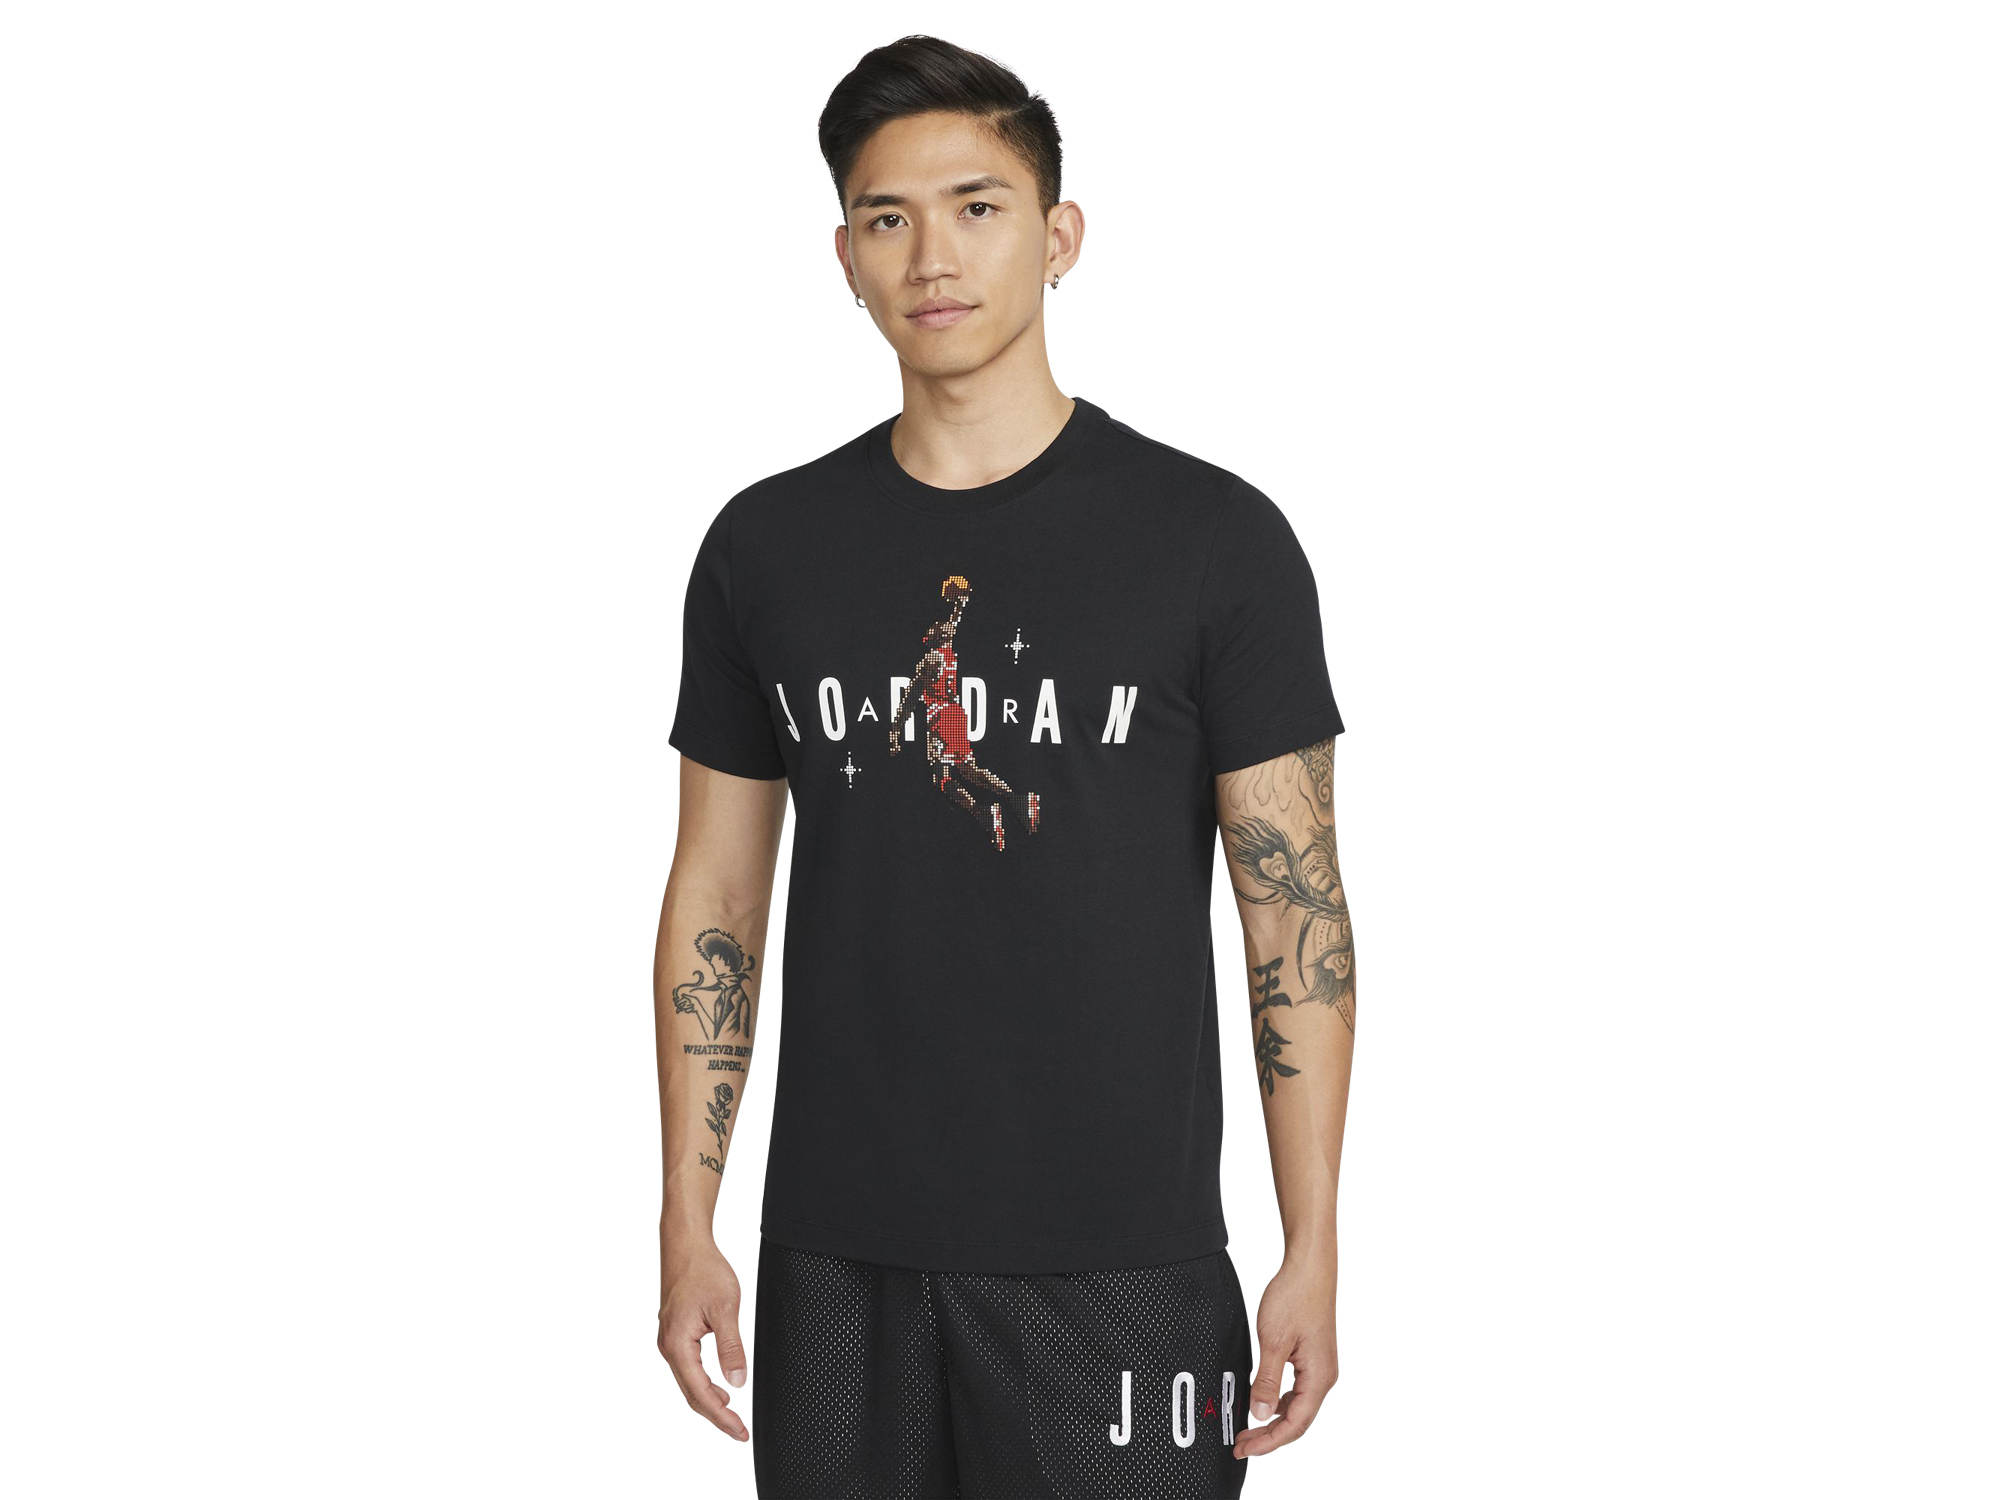 Jordan Brand Holiday T-Shirt